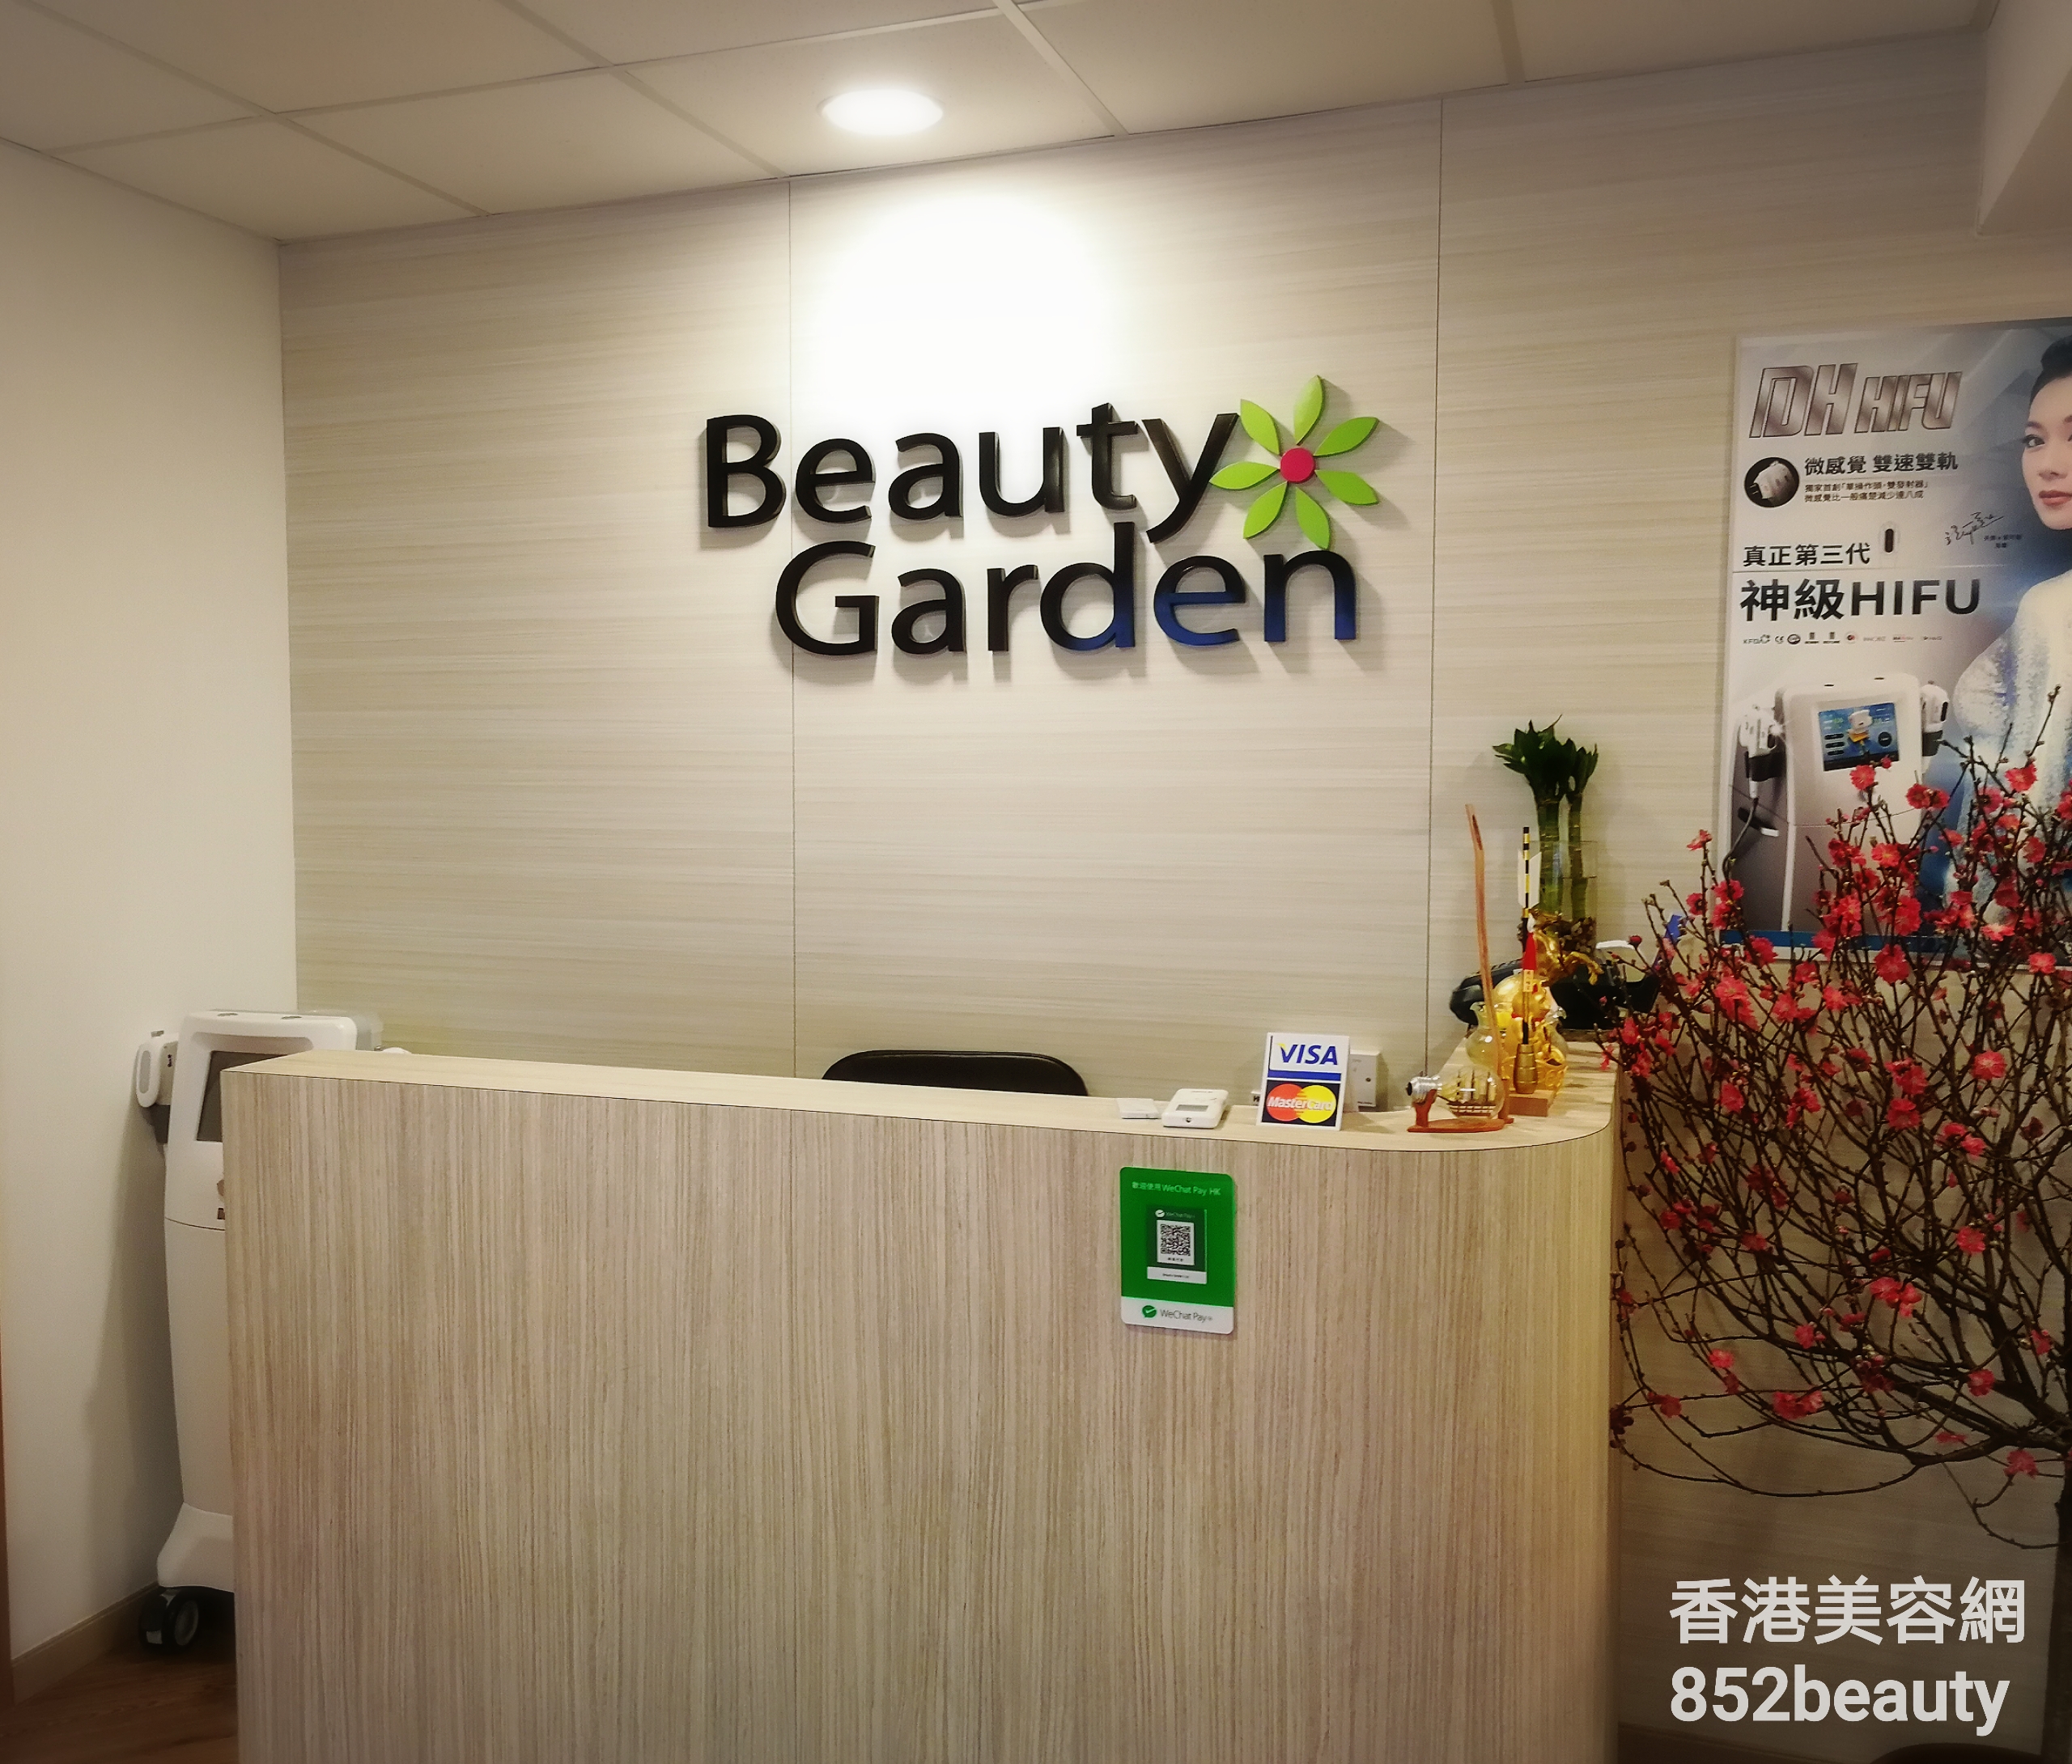 Eye Care: Beauty Garden